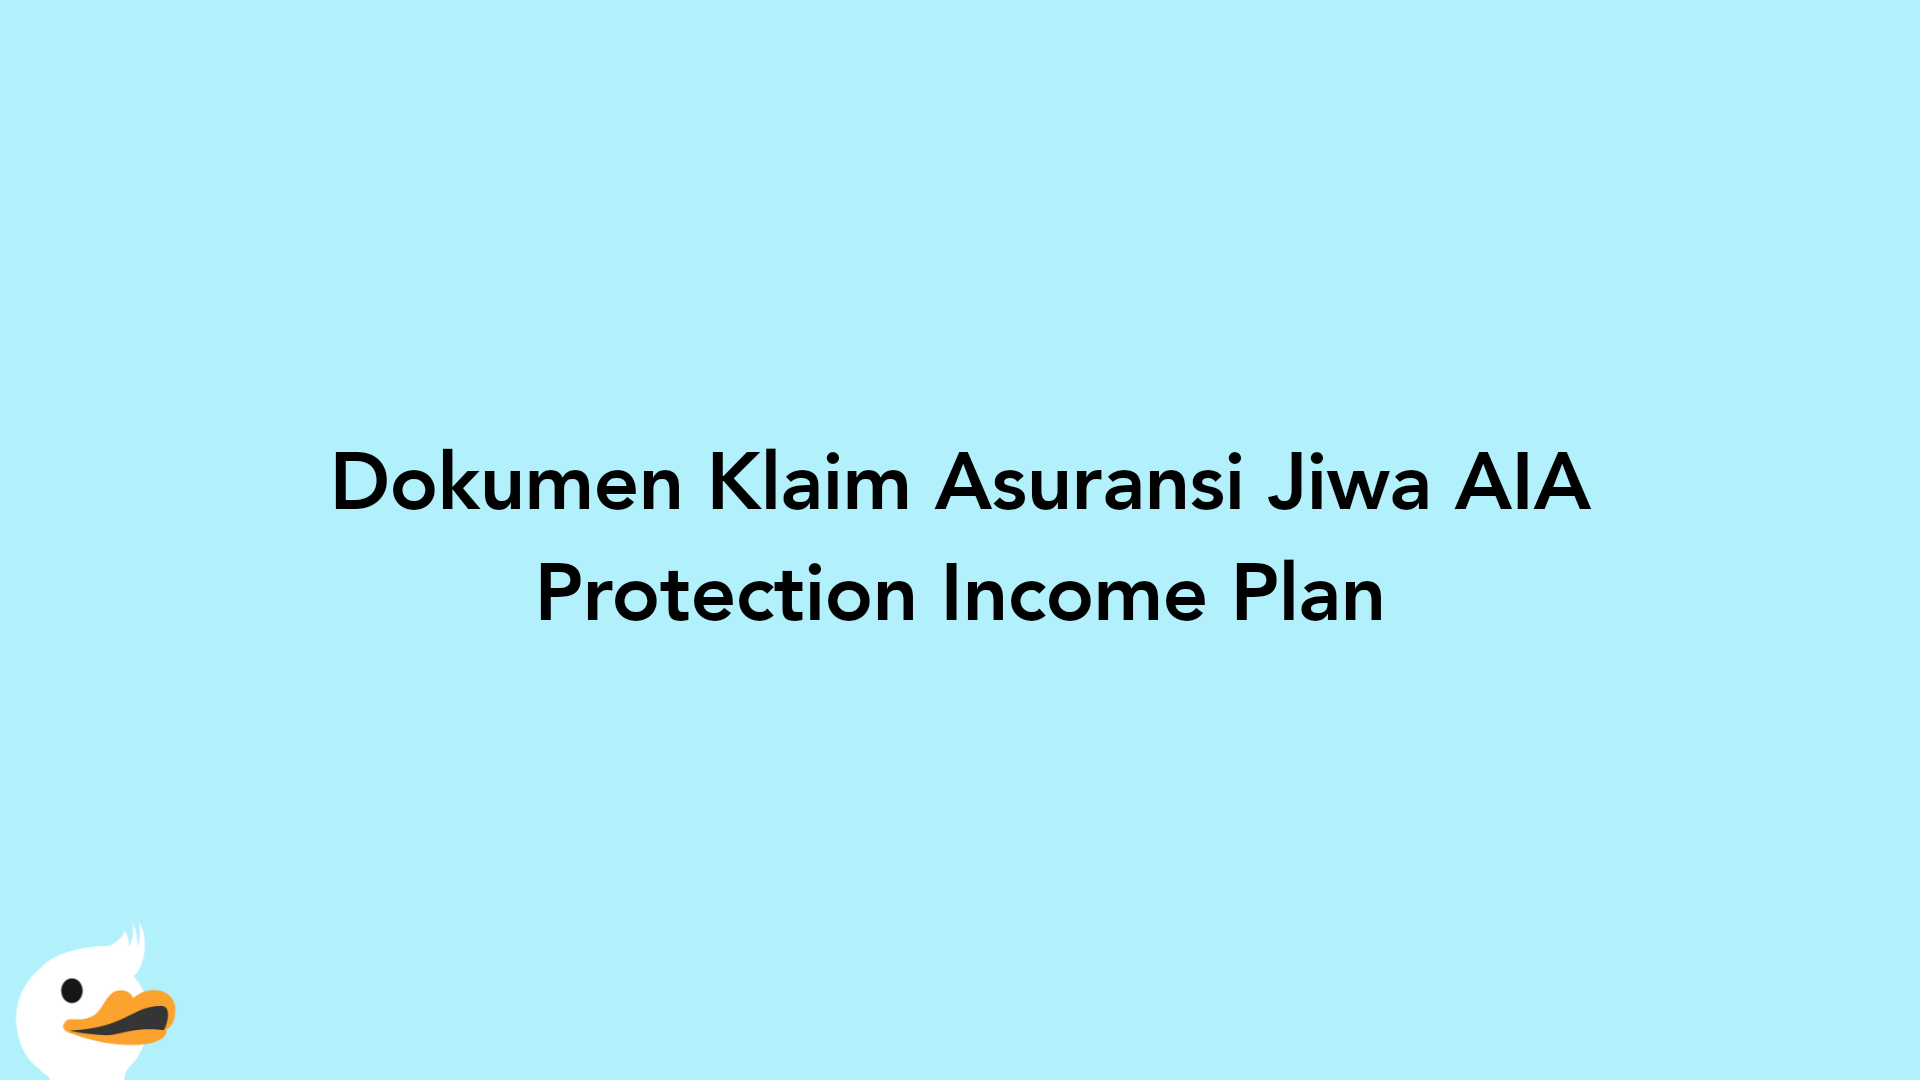 Dokumen Klaim Asuransi Jiwa AIA Protection Income Plan